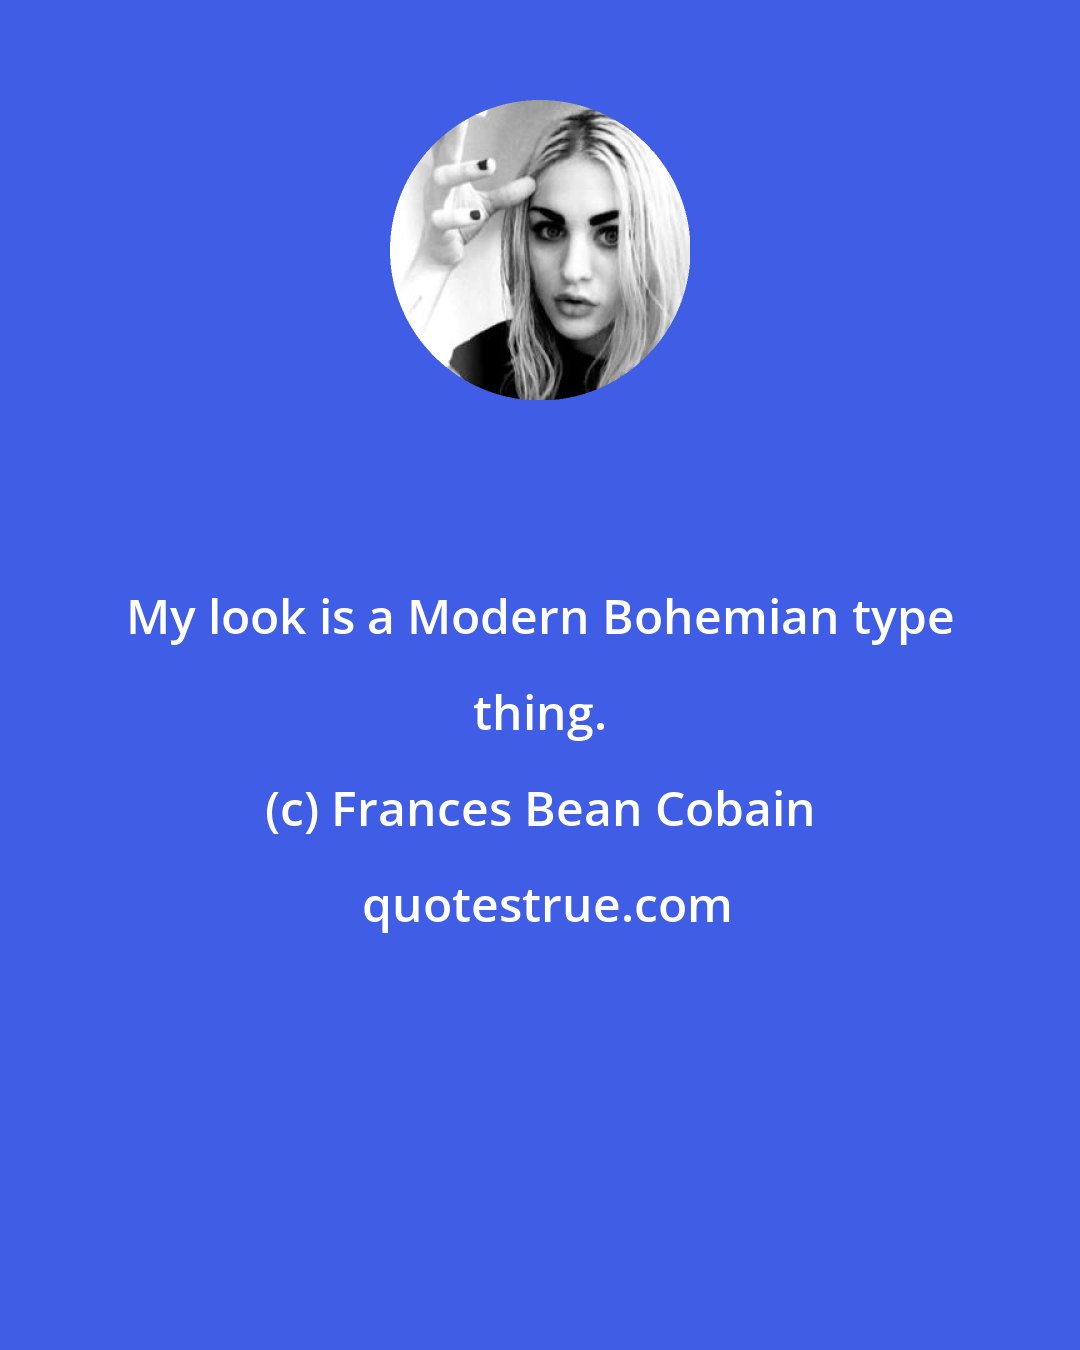 Frances Bean Cobain: My look is a Modern Bohemian type thing.